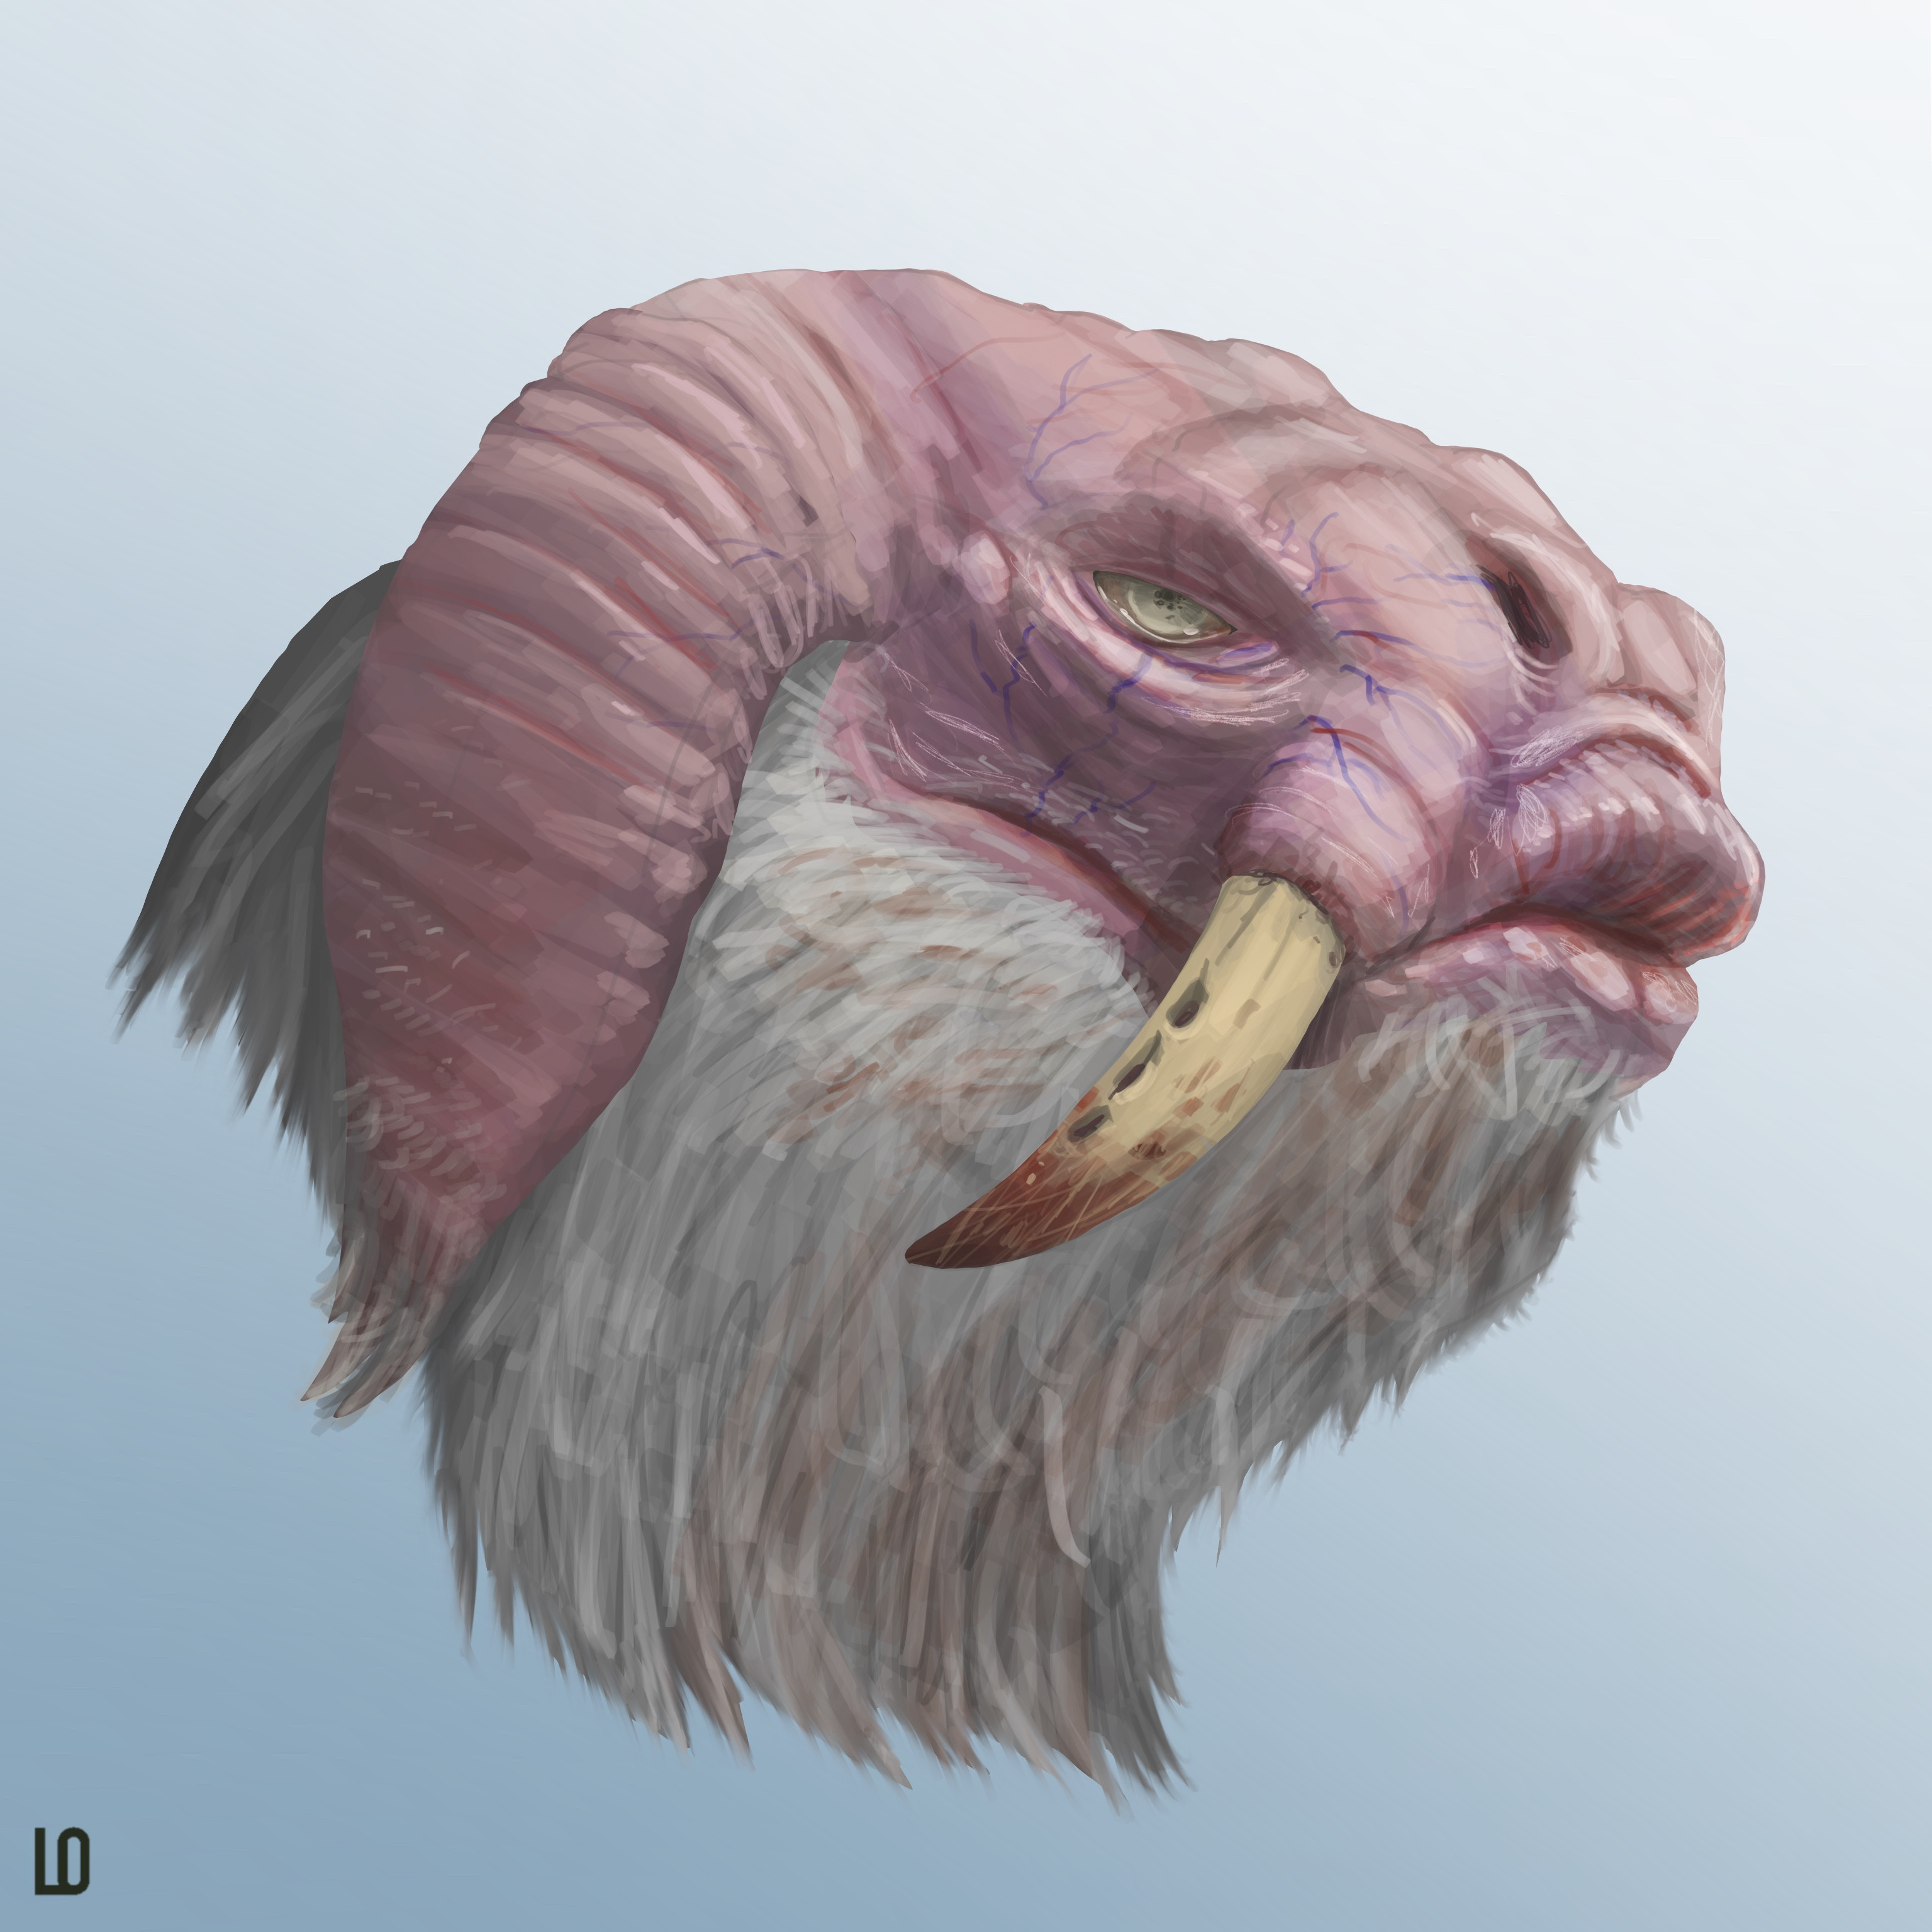 Grumpy sabretooth